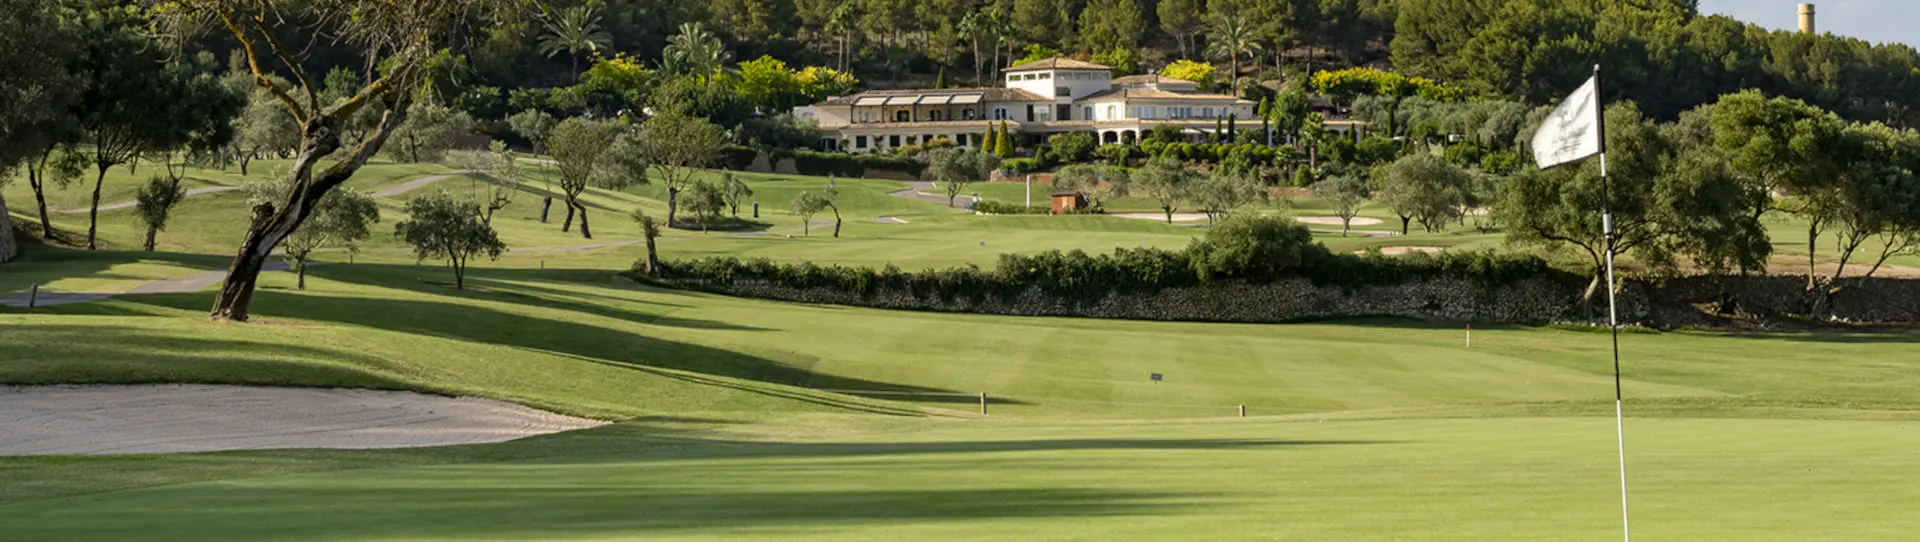 Spain golf courses - Arabella Son Muntaner Golf Course - Photo 2